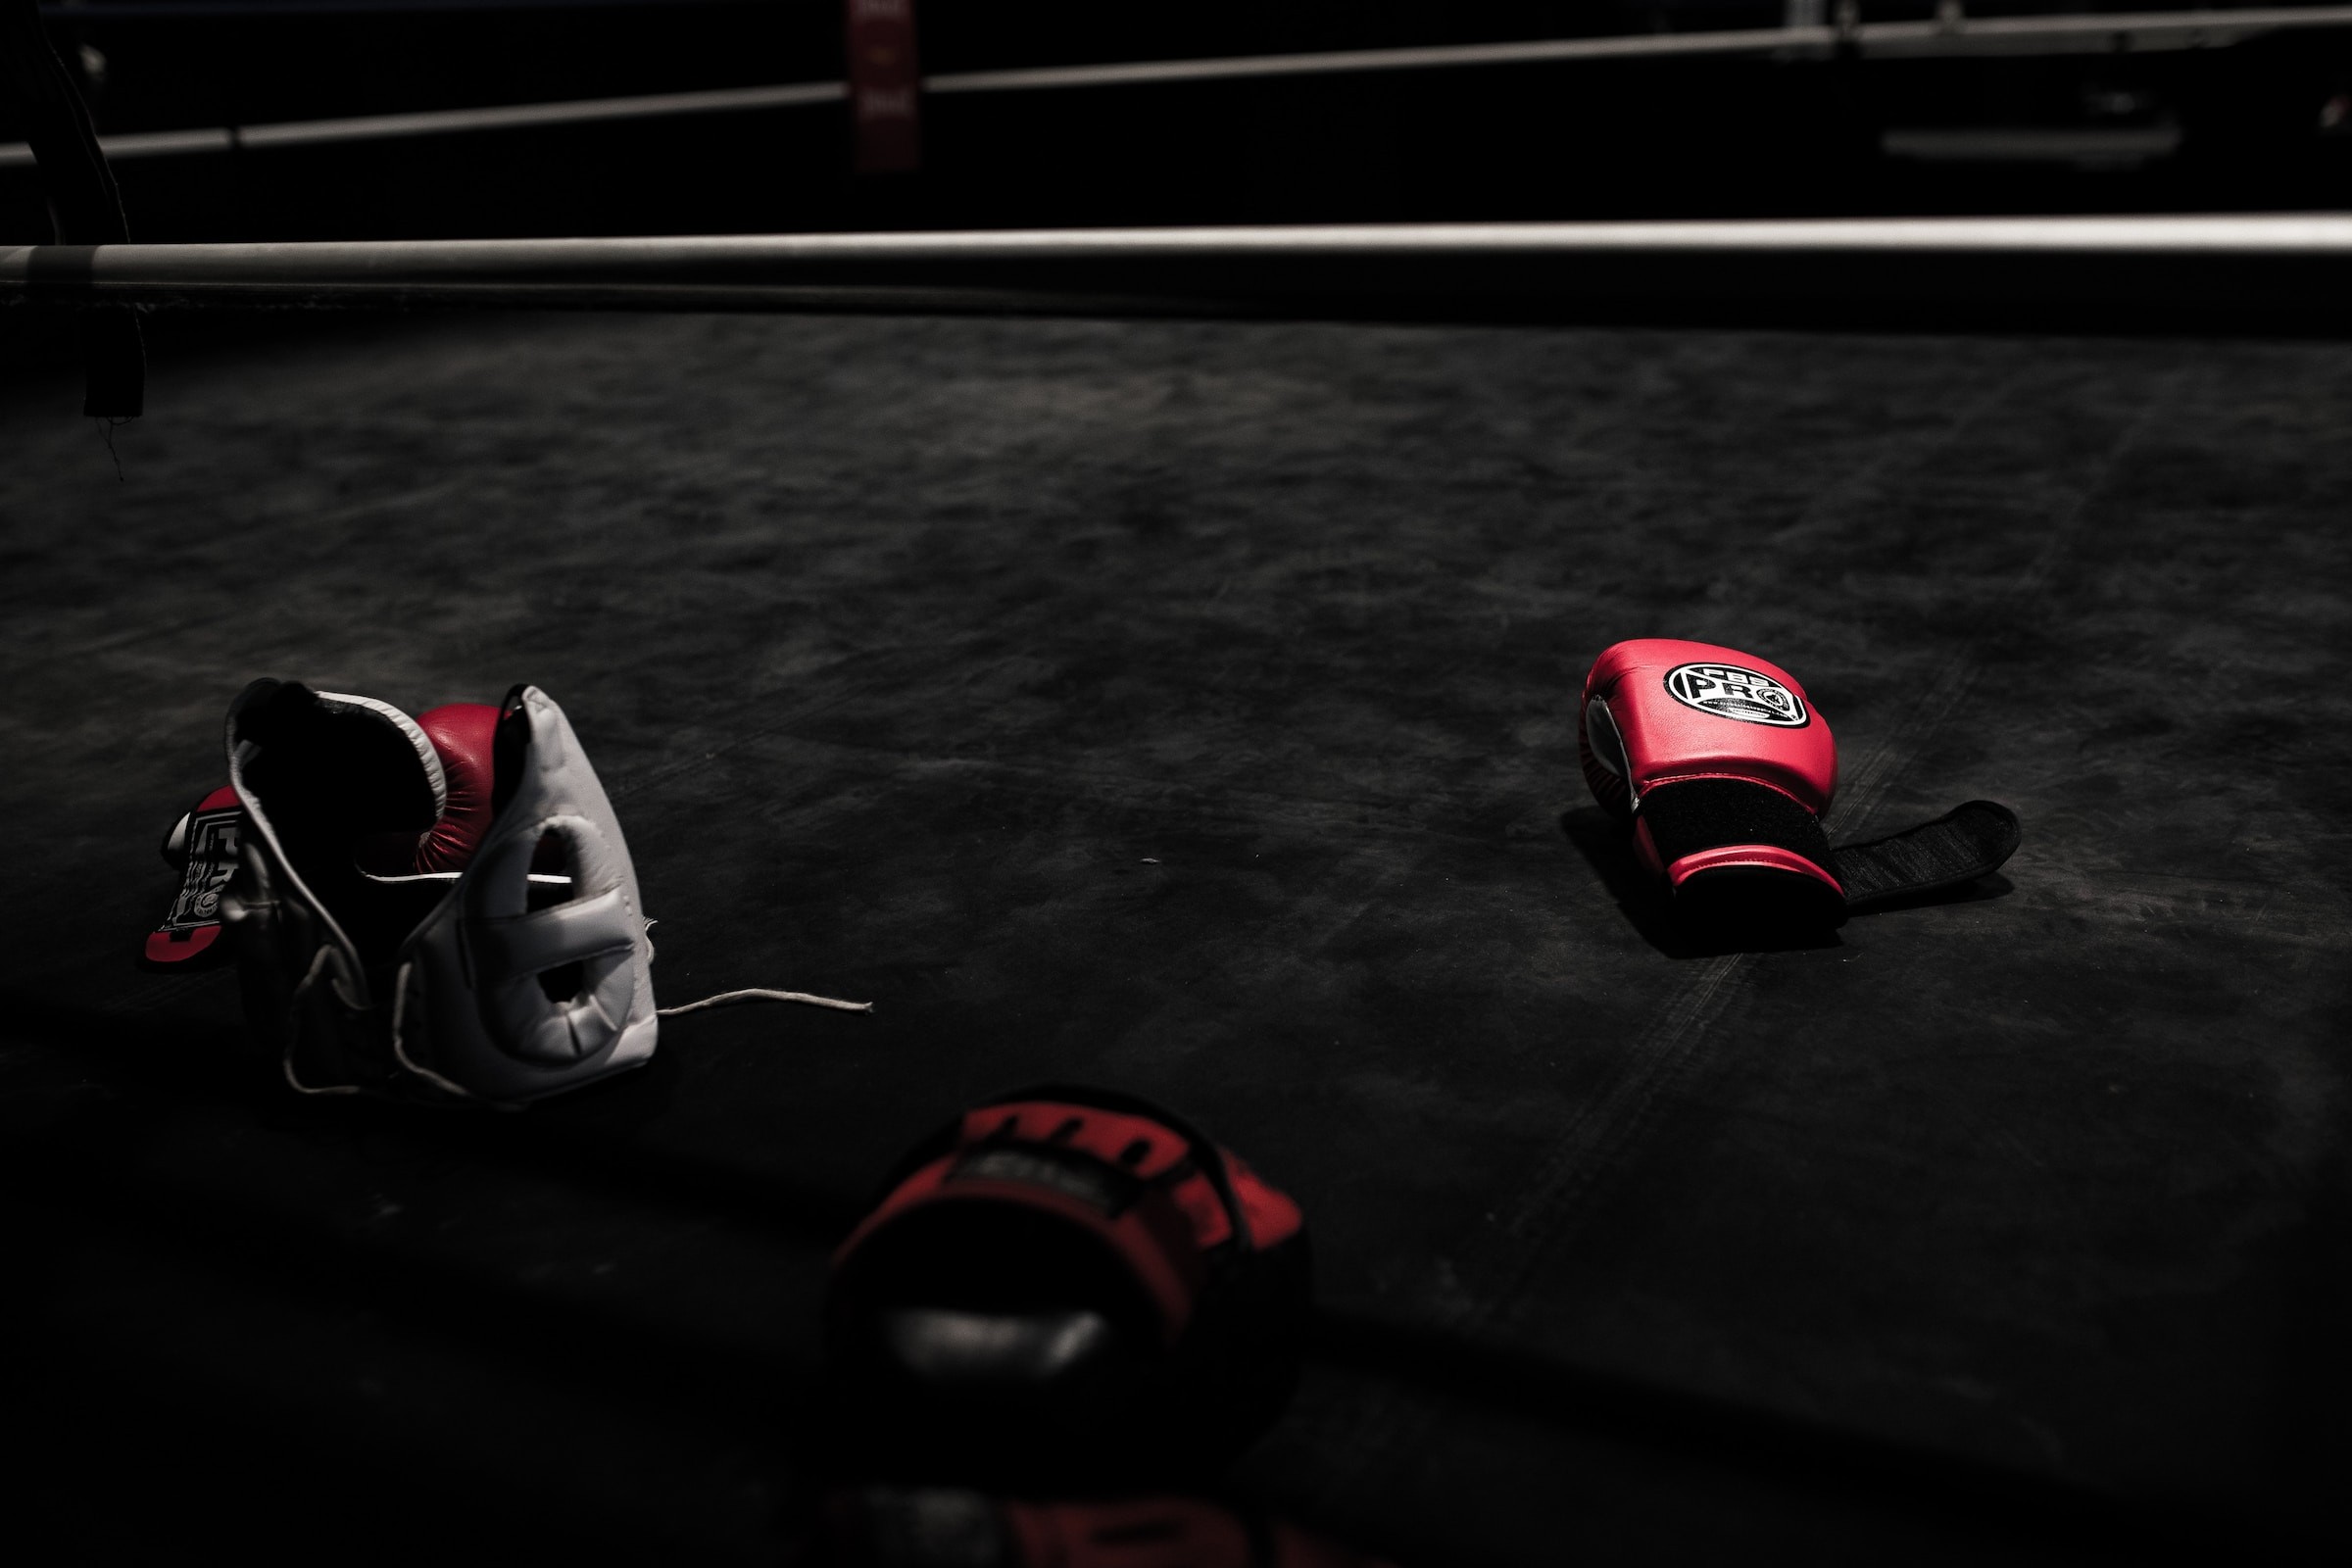 Boxing gear